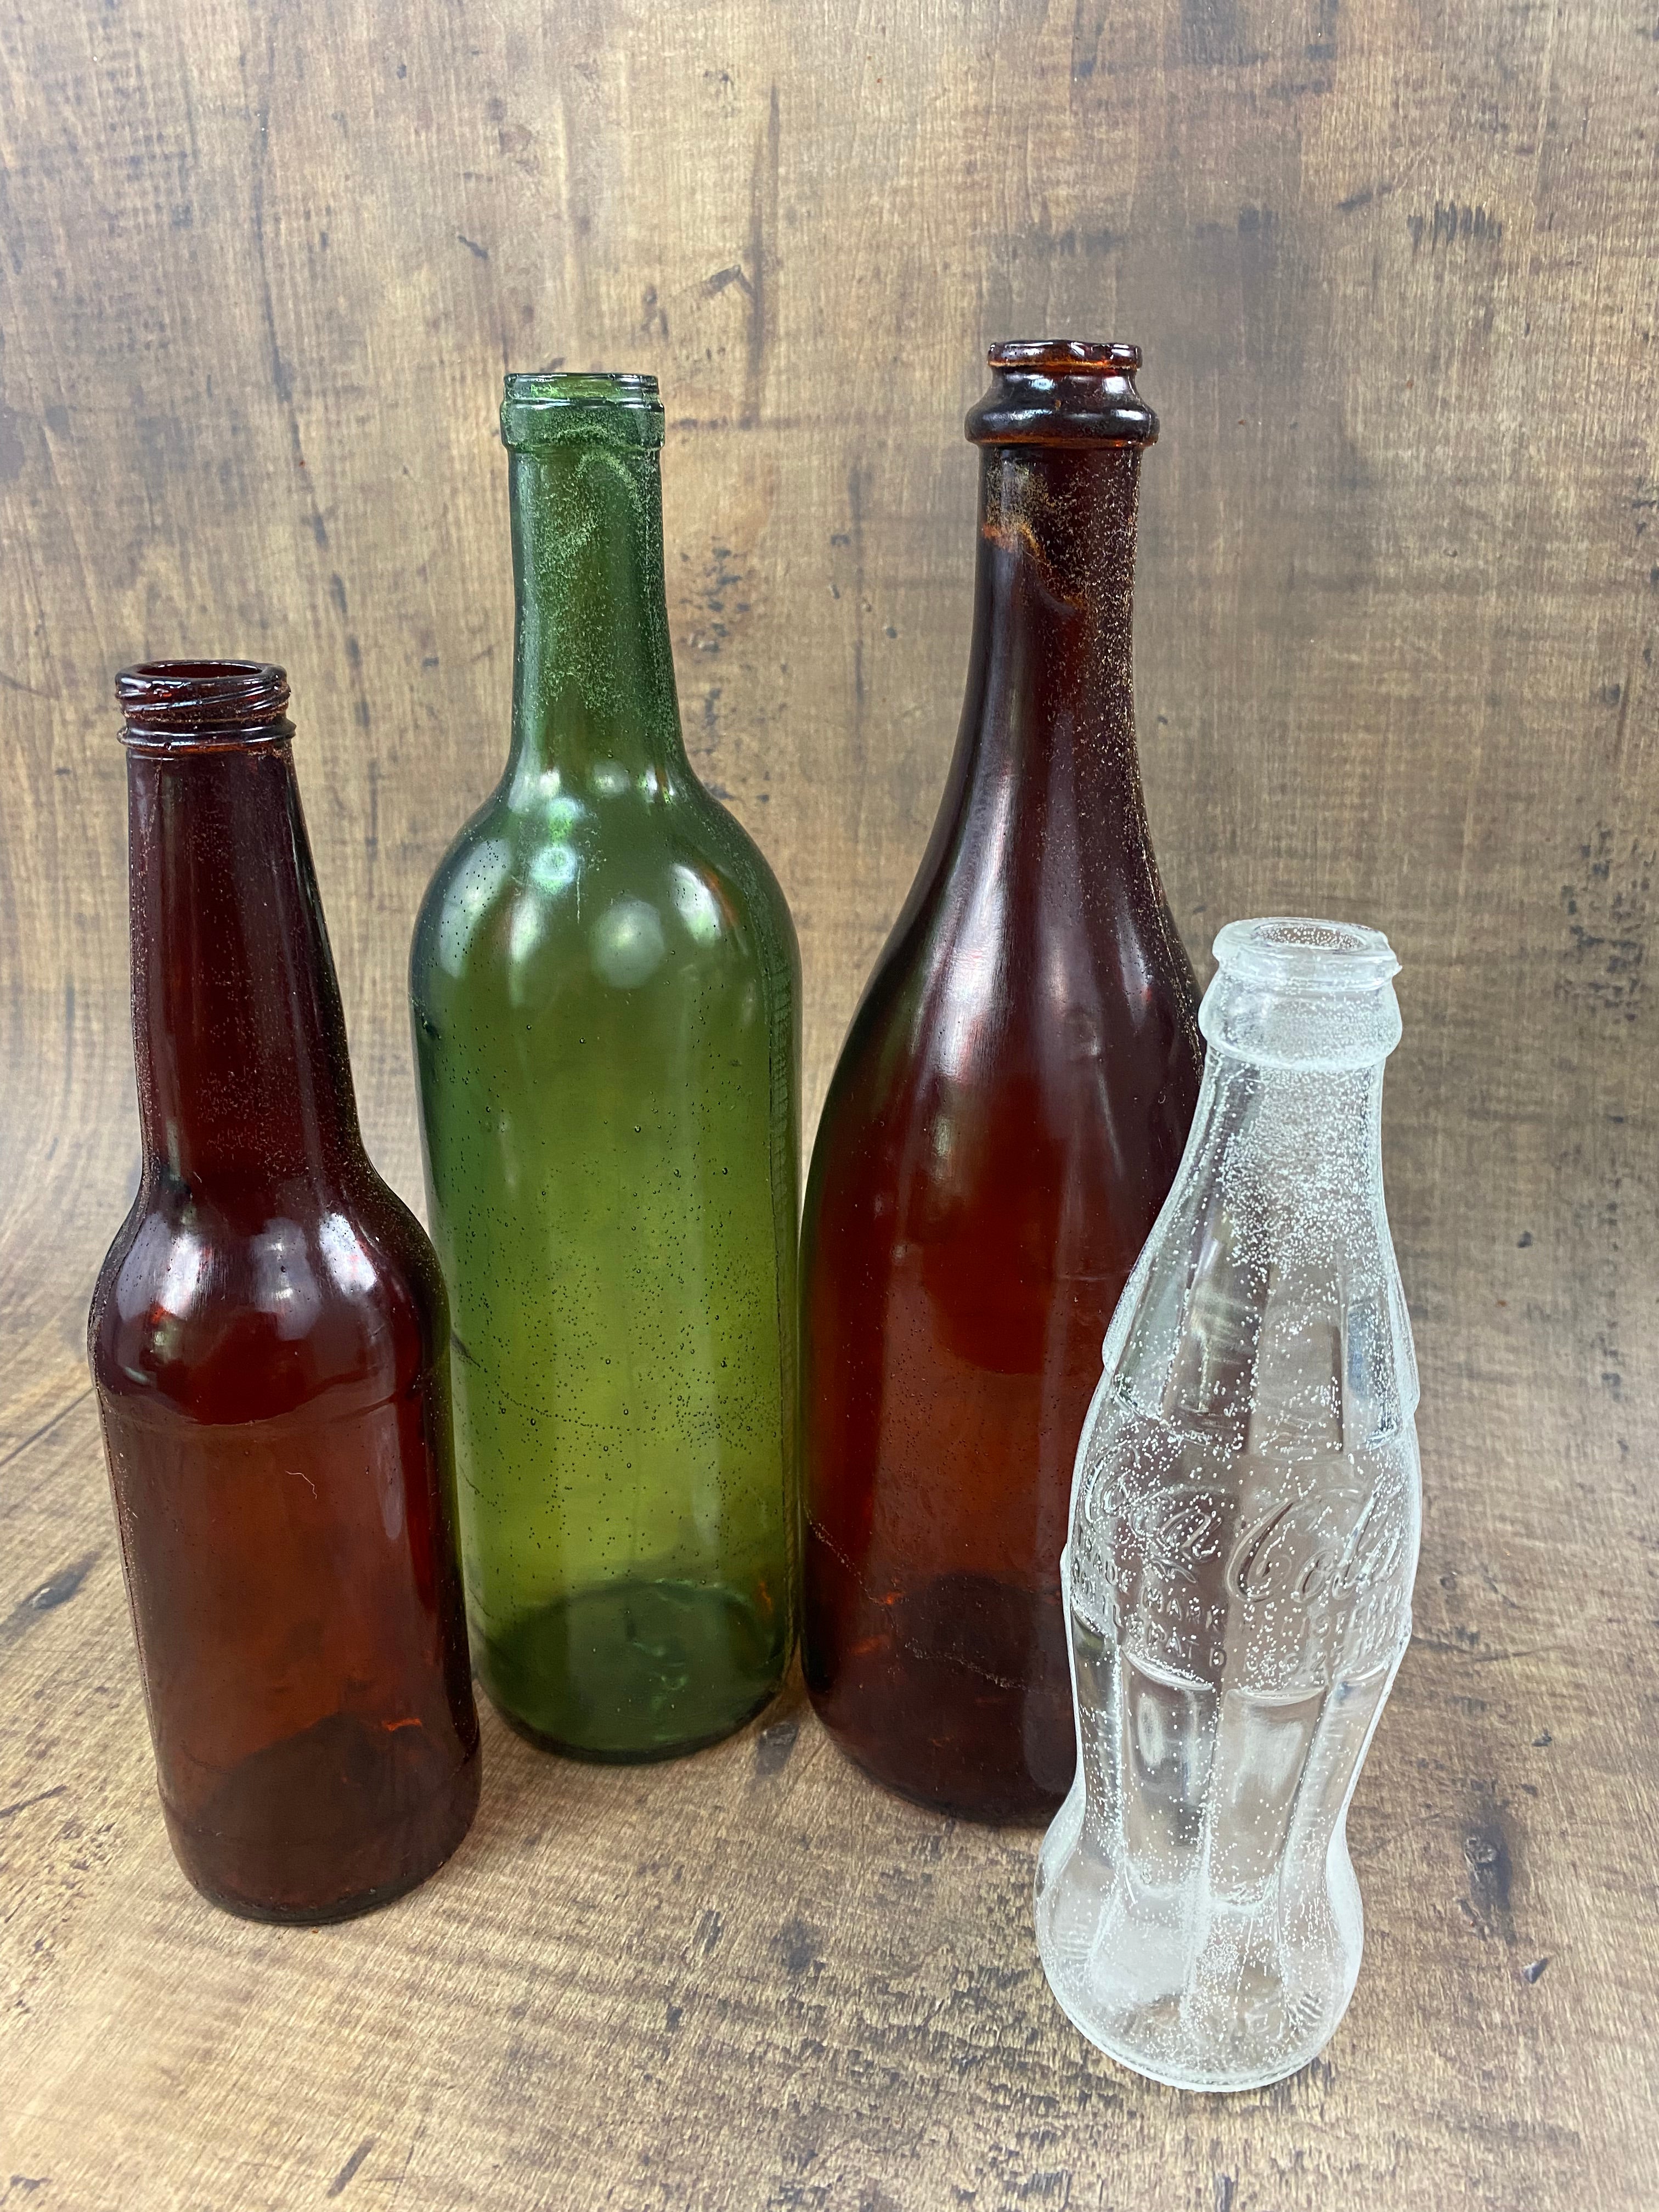 Sugar Glass/ fake glass bottle props